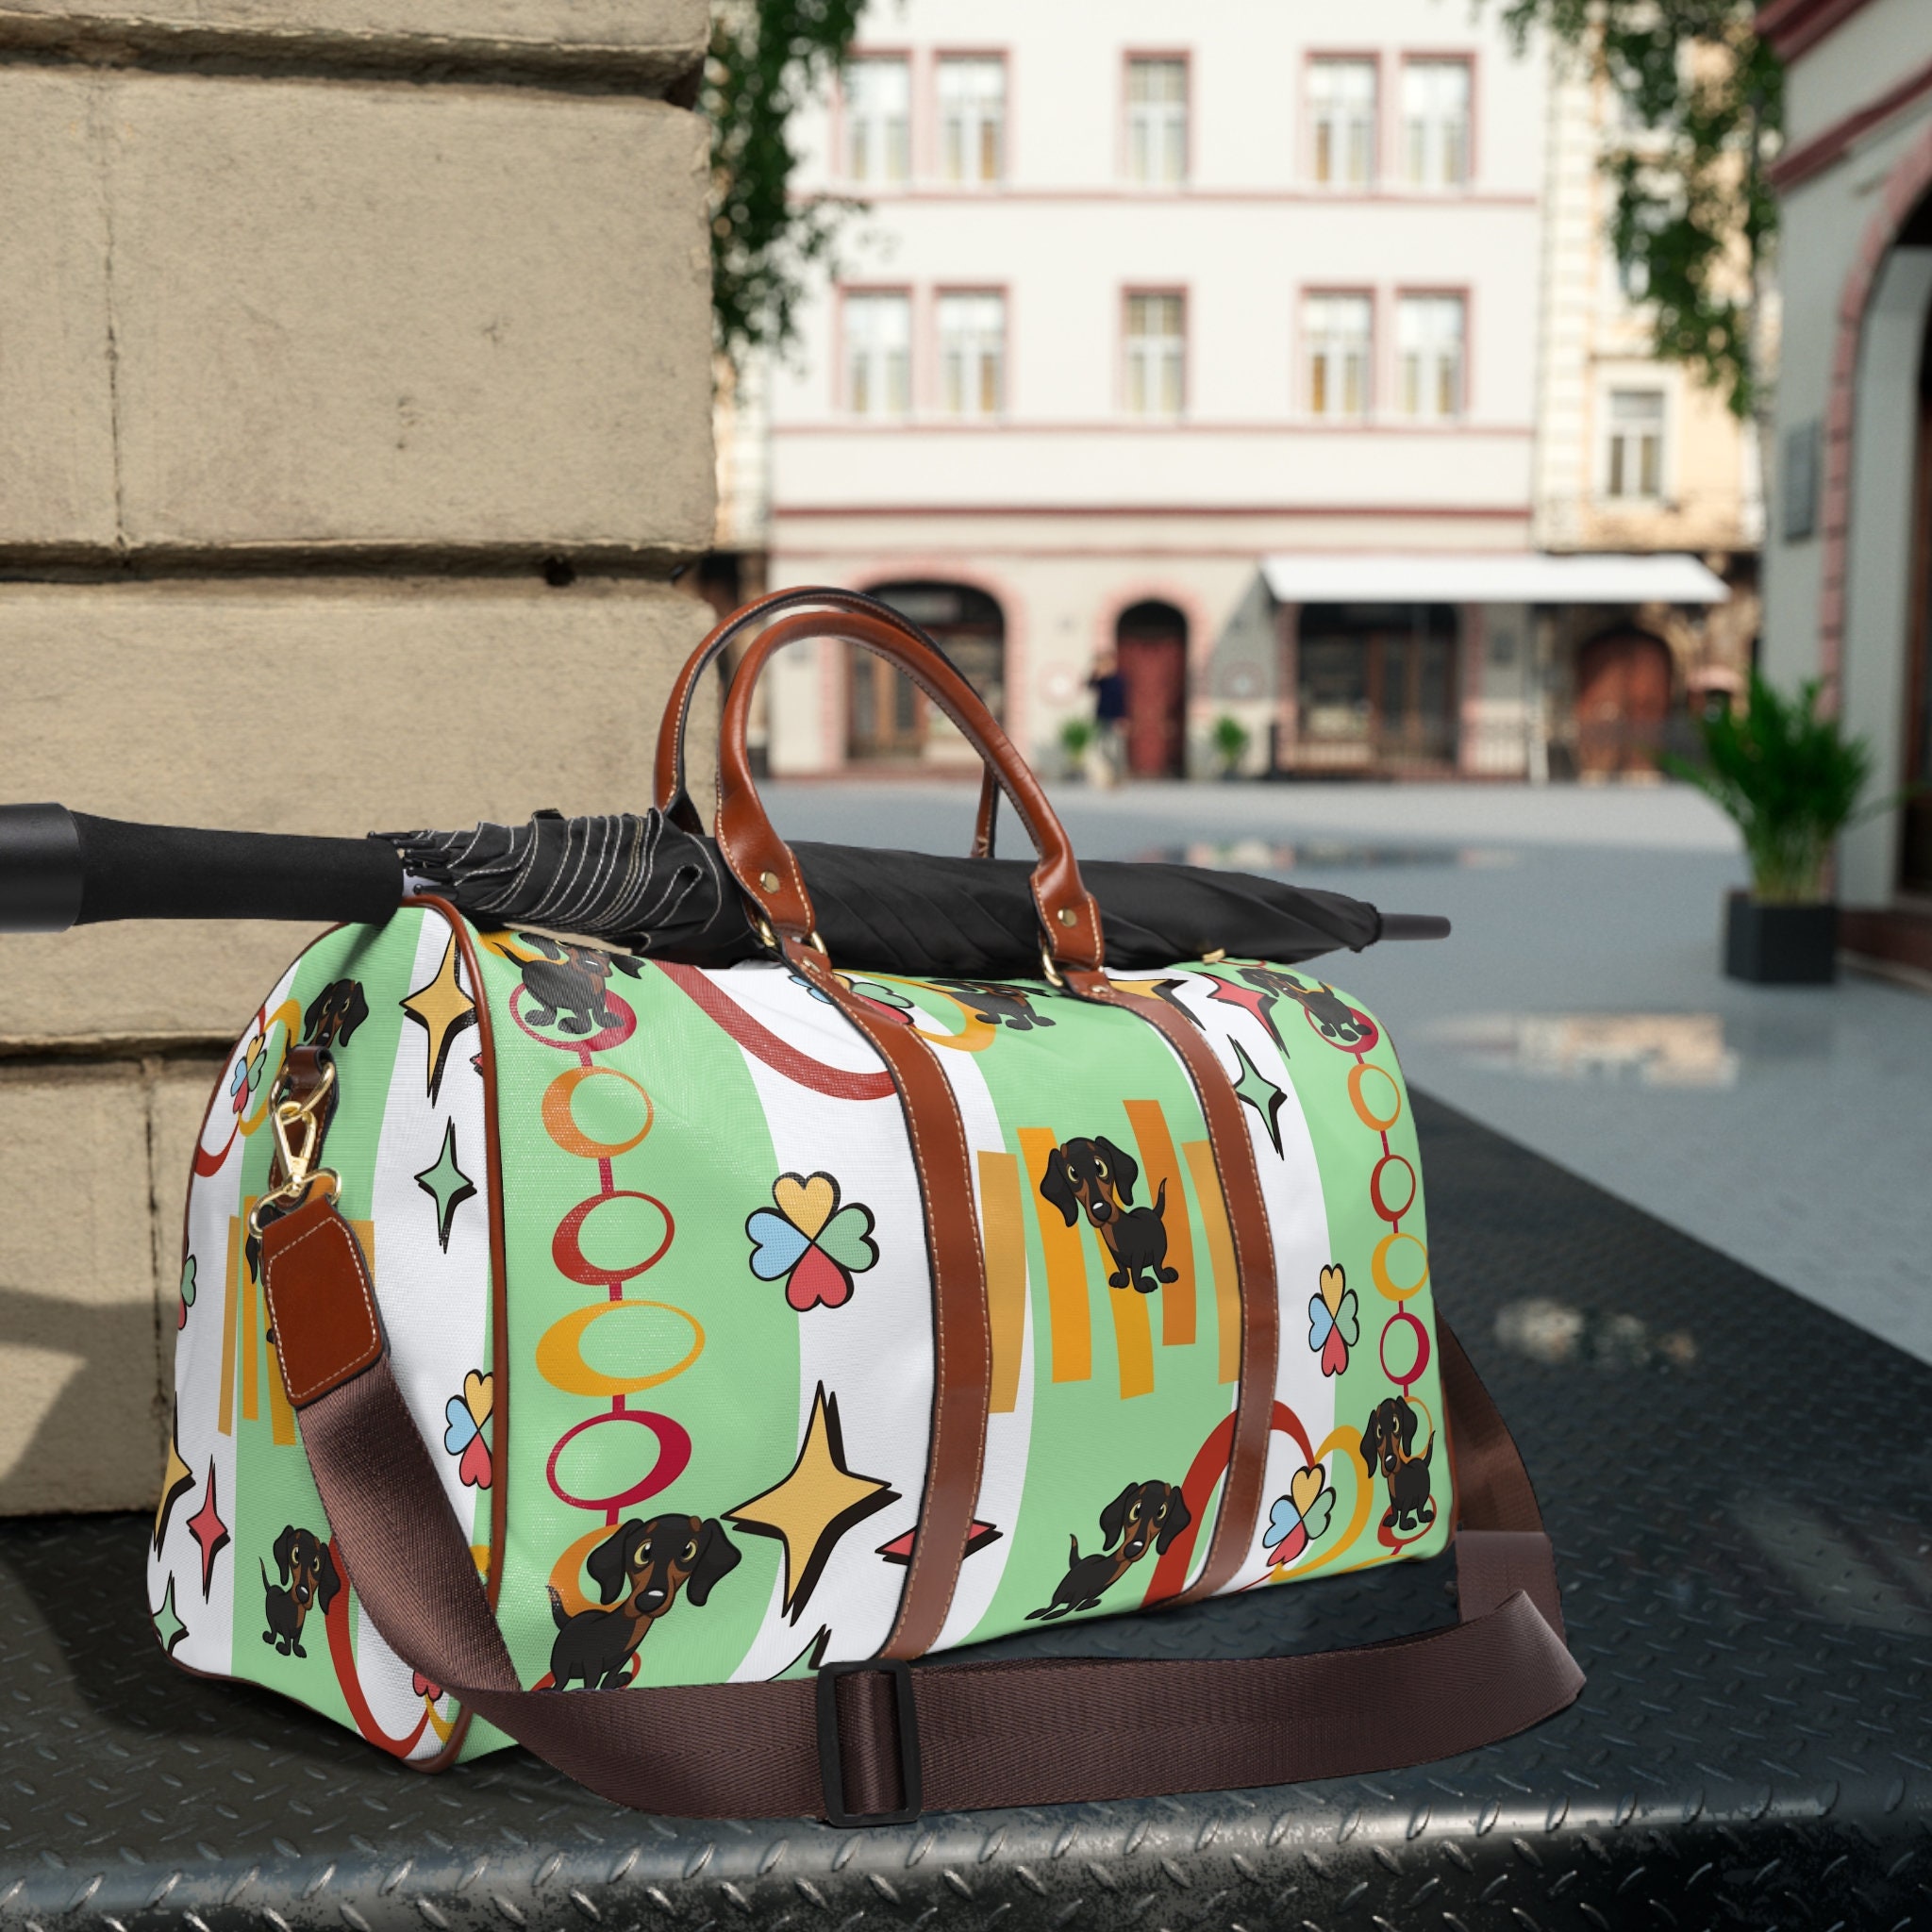 Cordura® Fabric Crossbody ITA Bag (Olive Green) – The Artistry